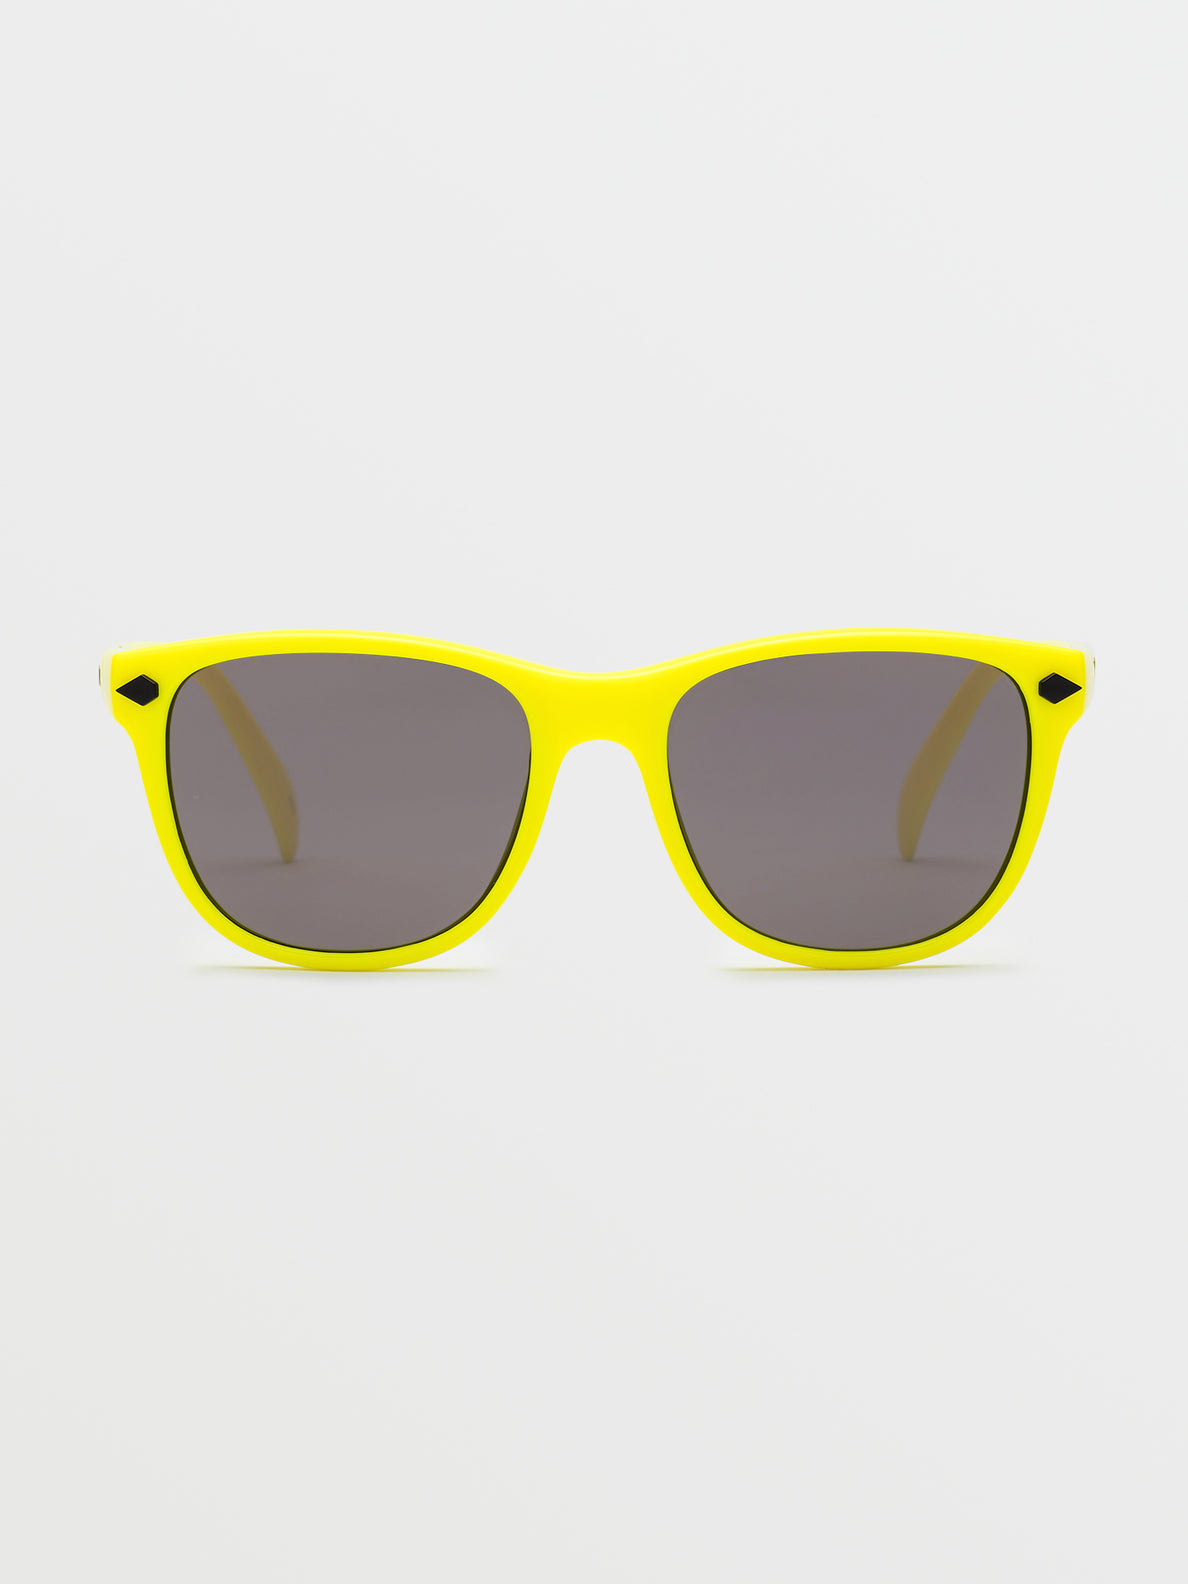 Swing Sunglasses - Gloss Lime/Gray